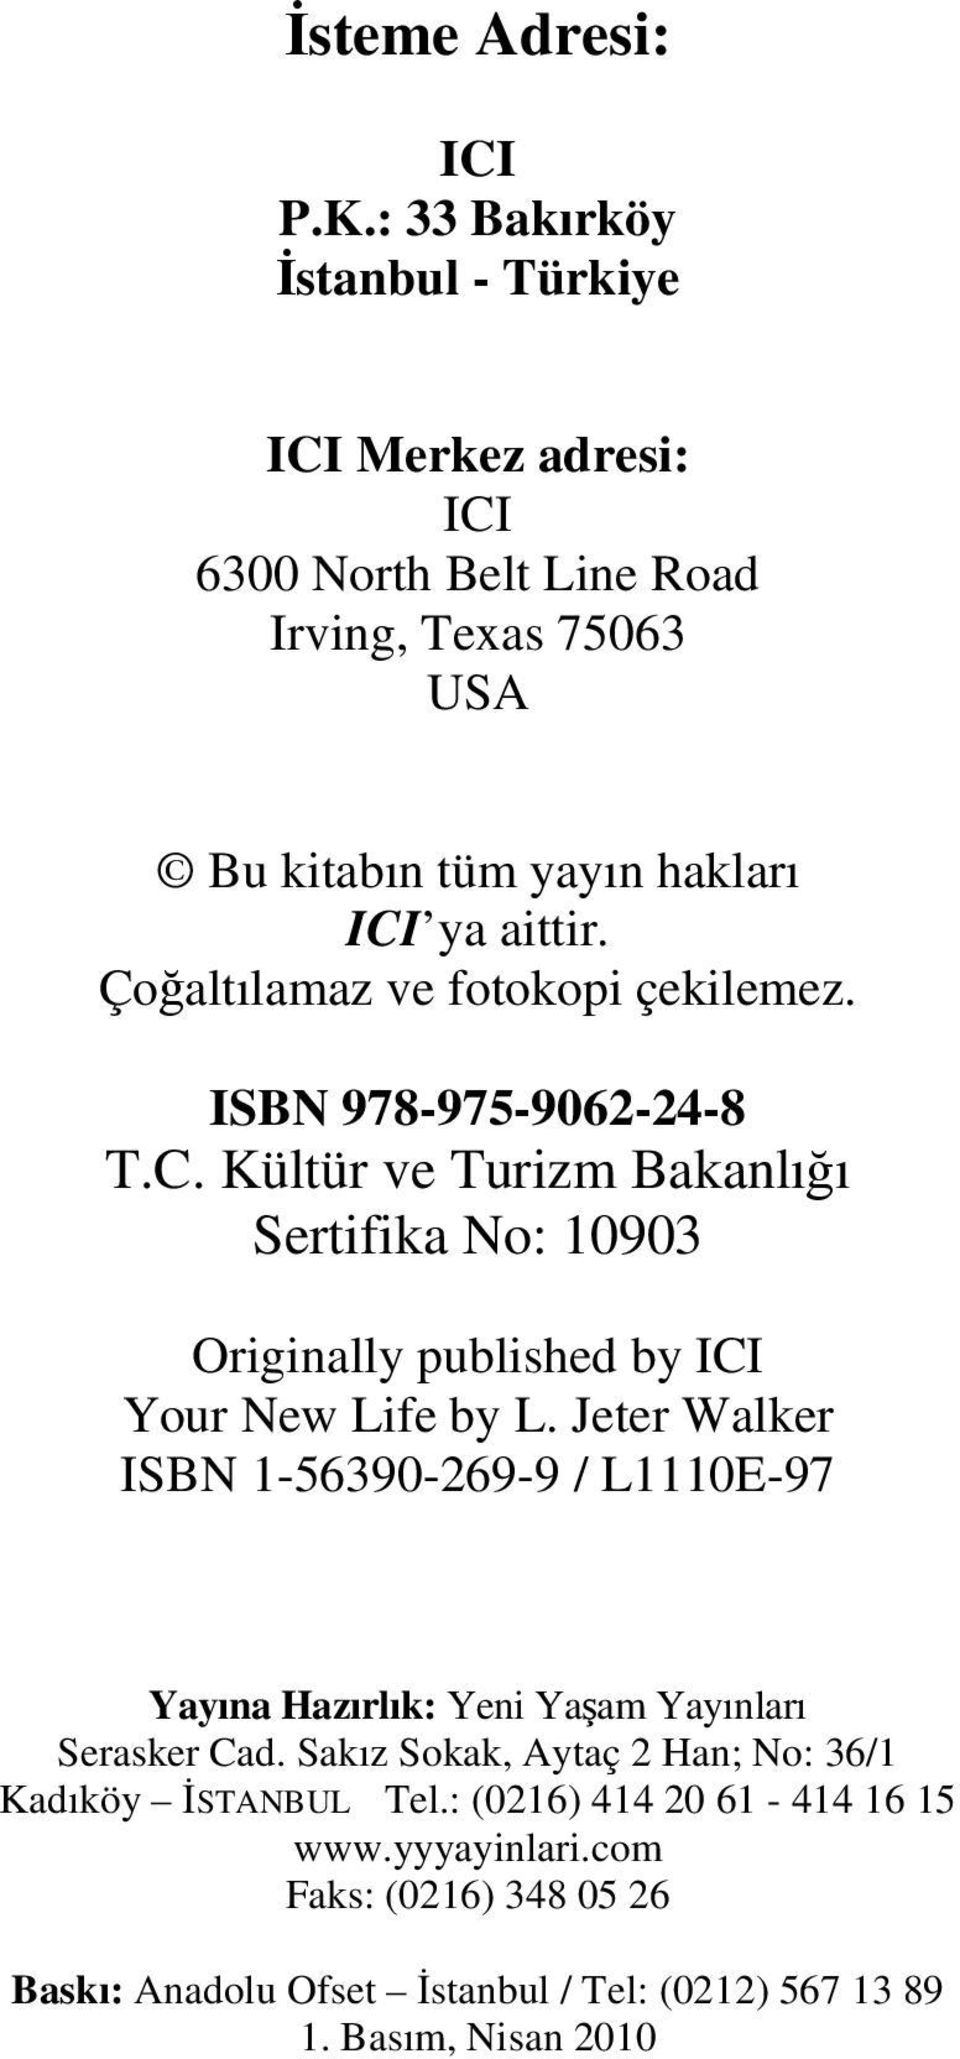 Çoğaltılamaz ve fotokopi çekilemez. ISBN 978-975-9062-24-8 T.C. Kültür ve Turizm Bakanlığı Sertifika No: 10903 Originally published by ICI Your New Life by L.